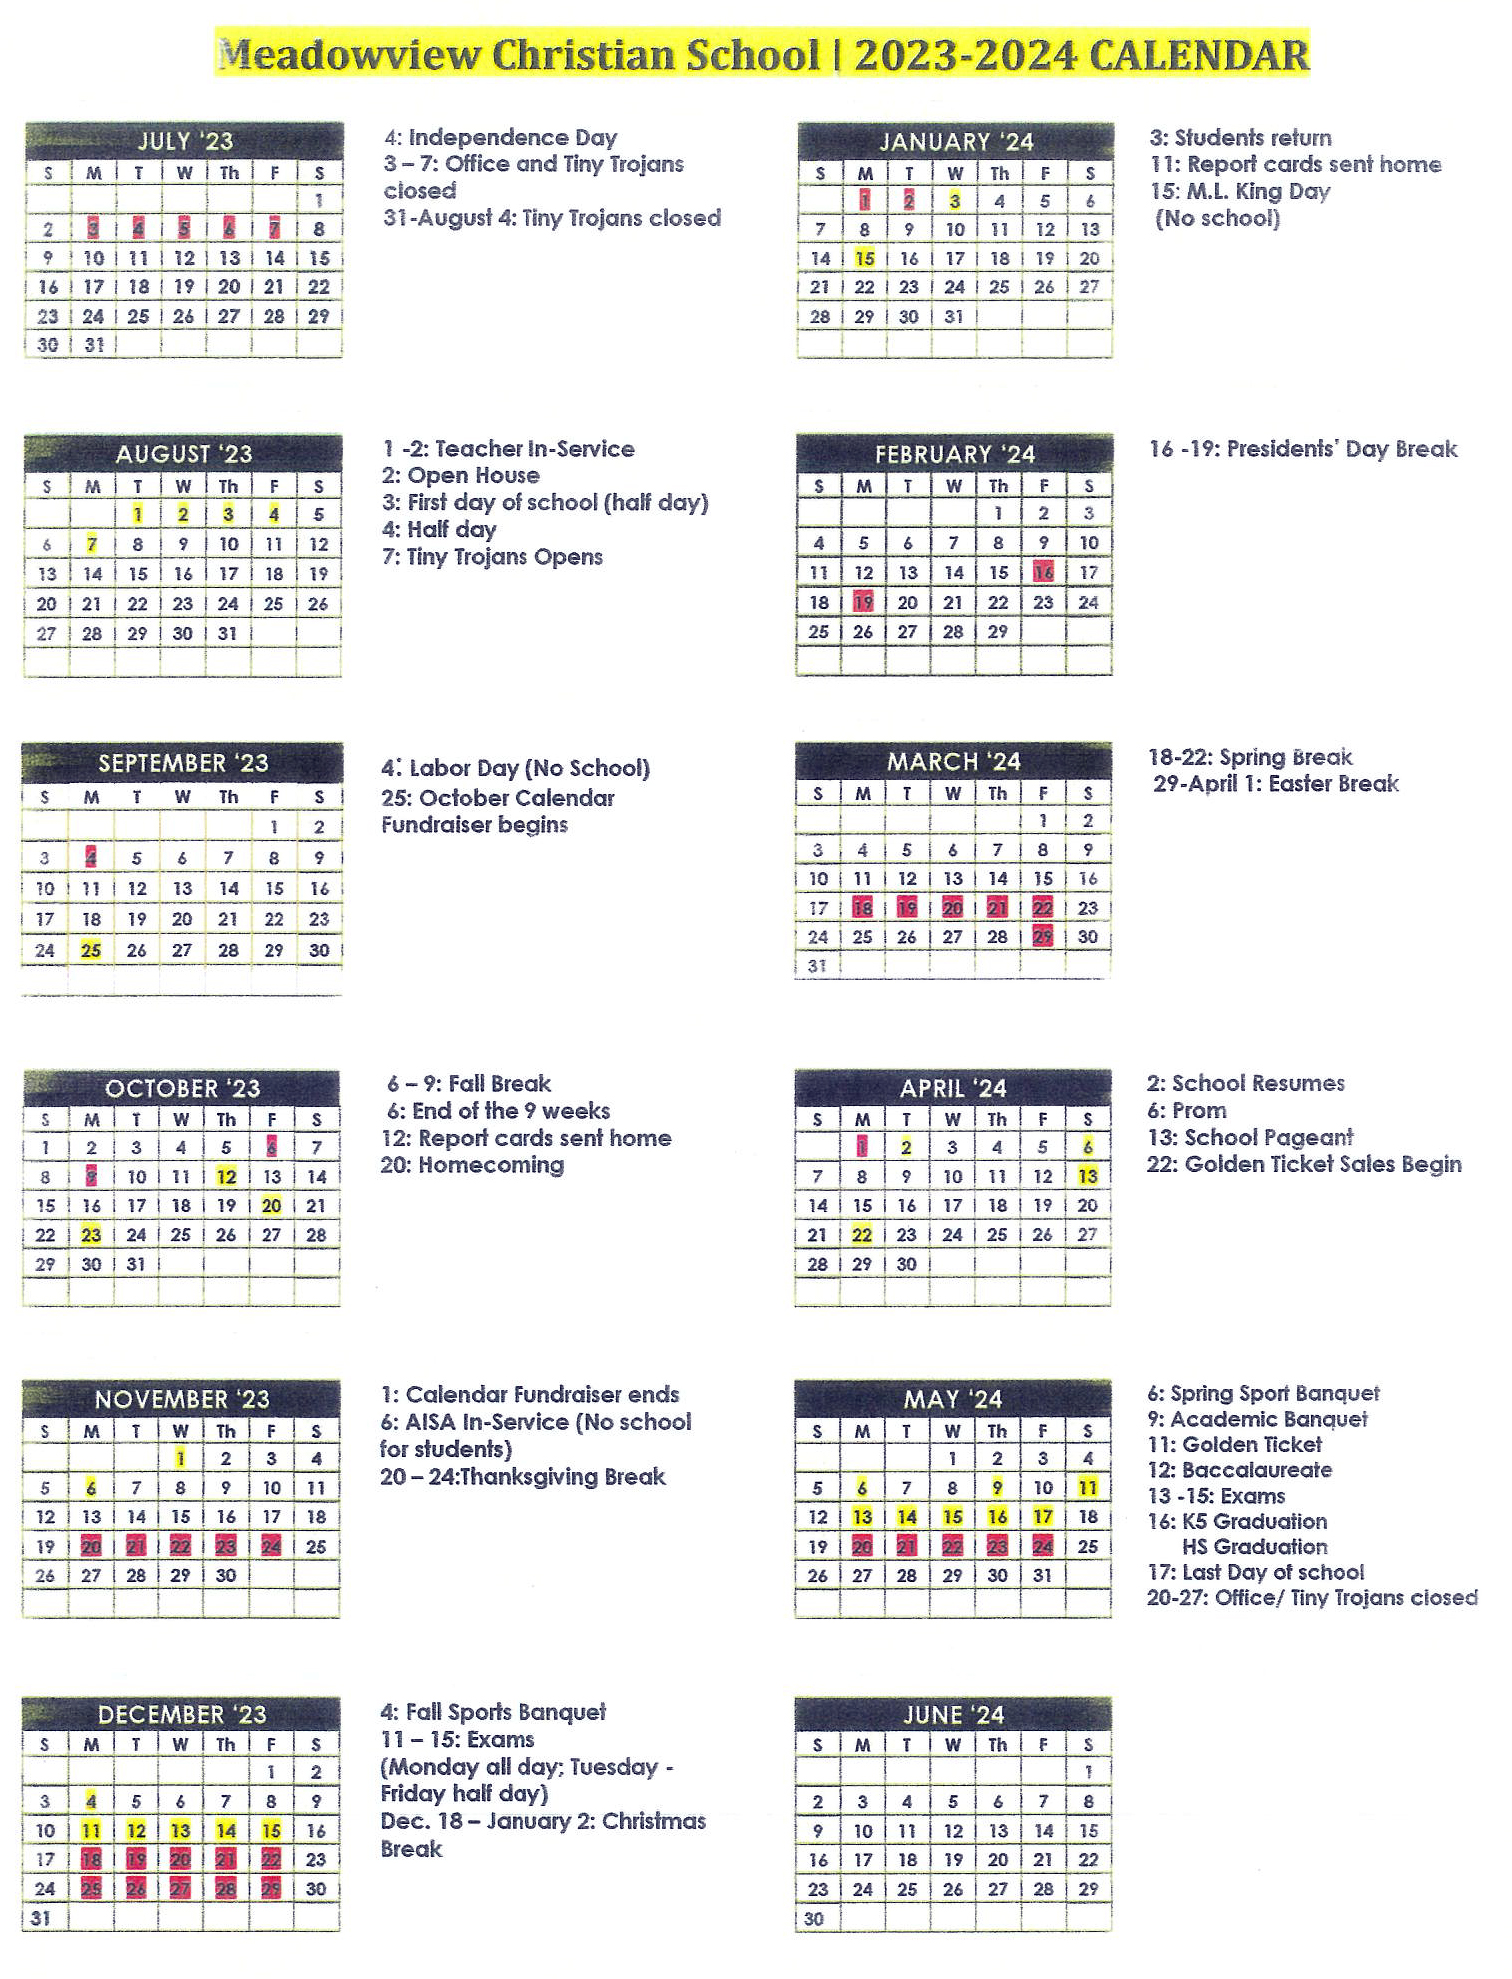 Meadowview Christian School Calendar